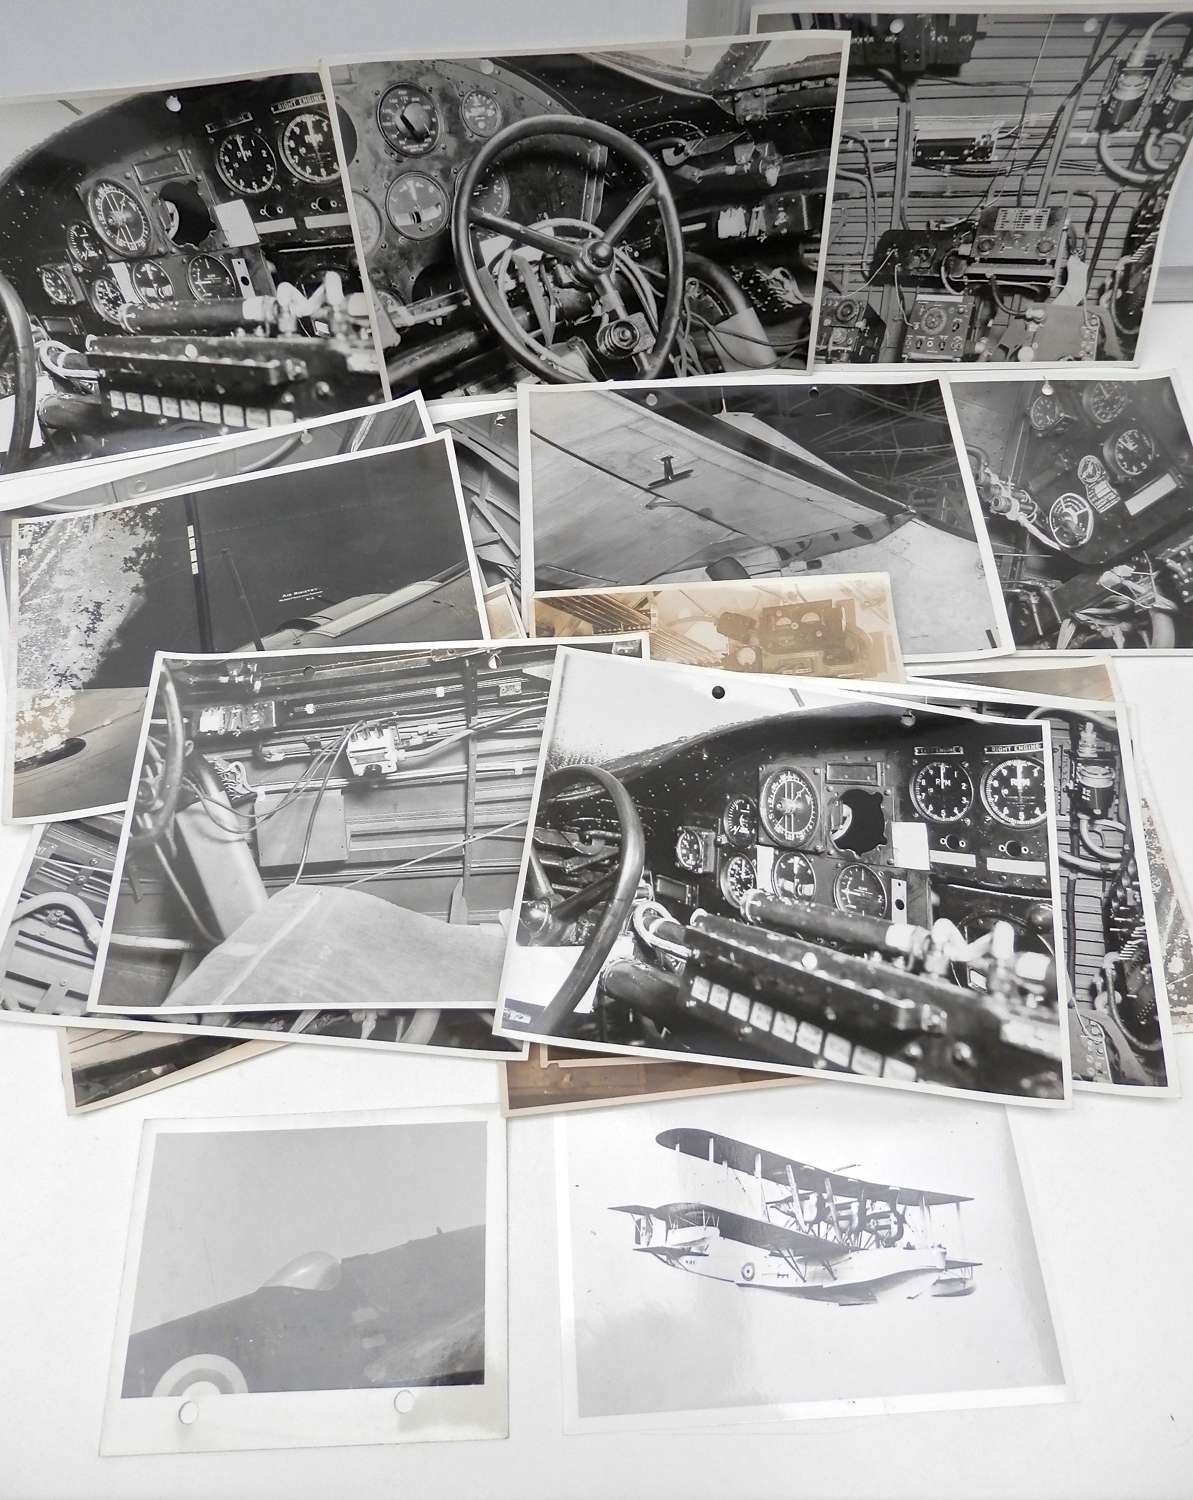 RAF aircraft photographs.